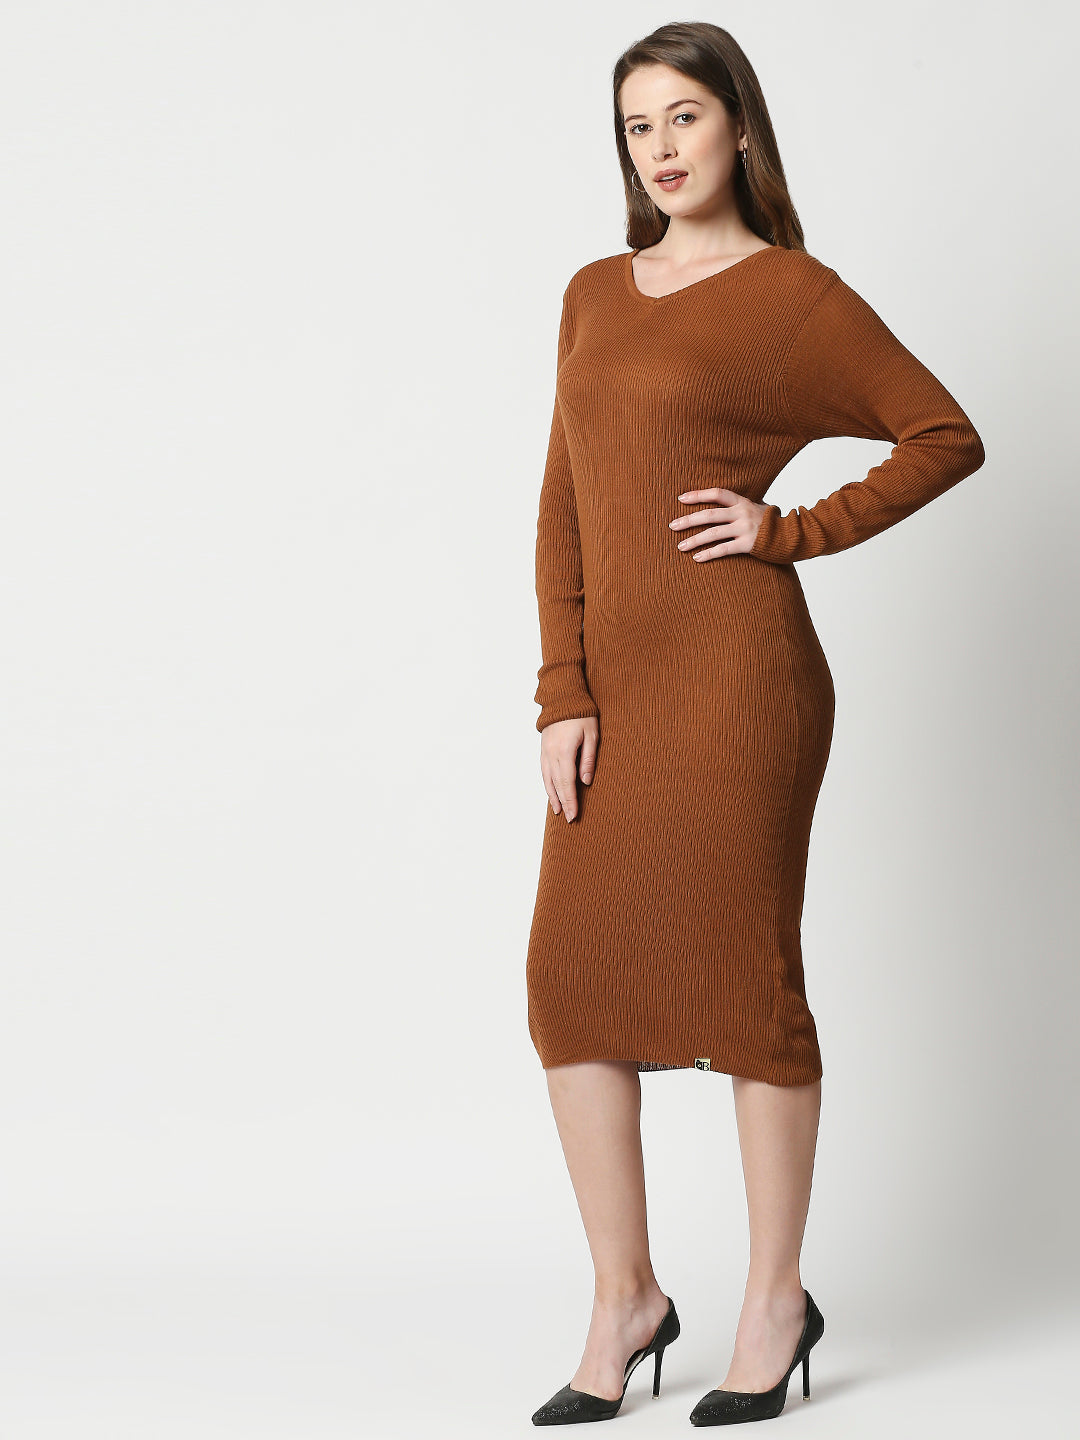 Buy Women's Flat knit Dark Brown Full Sleeves Dress